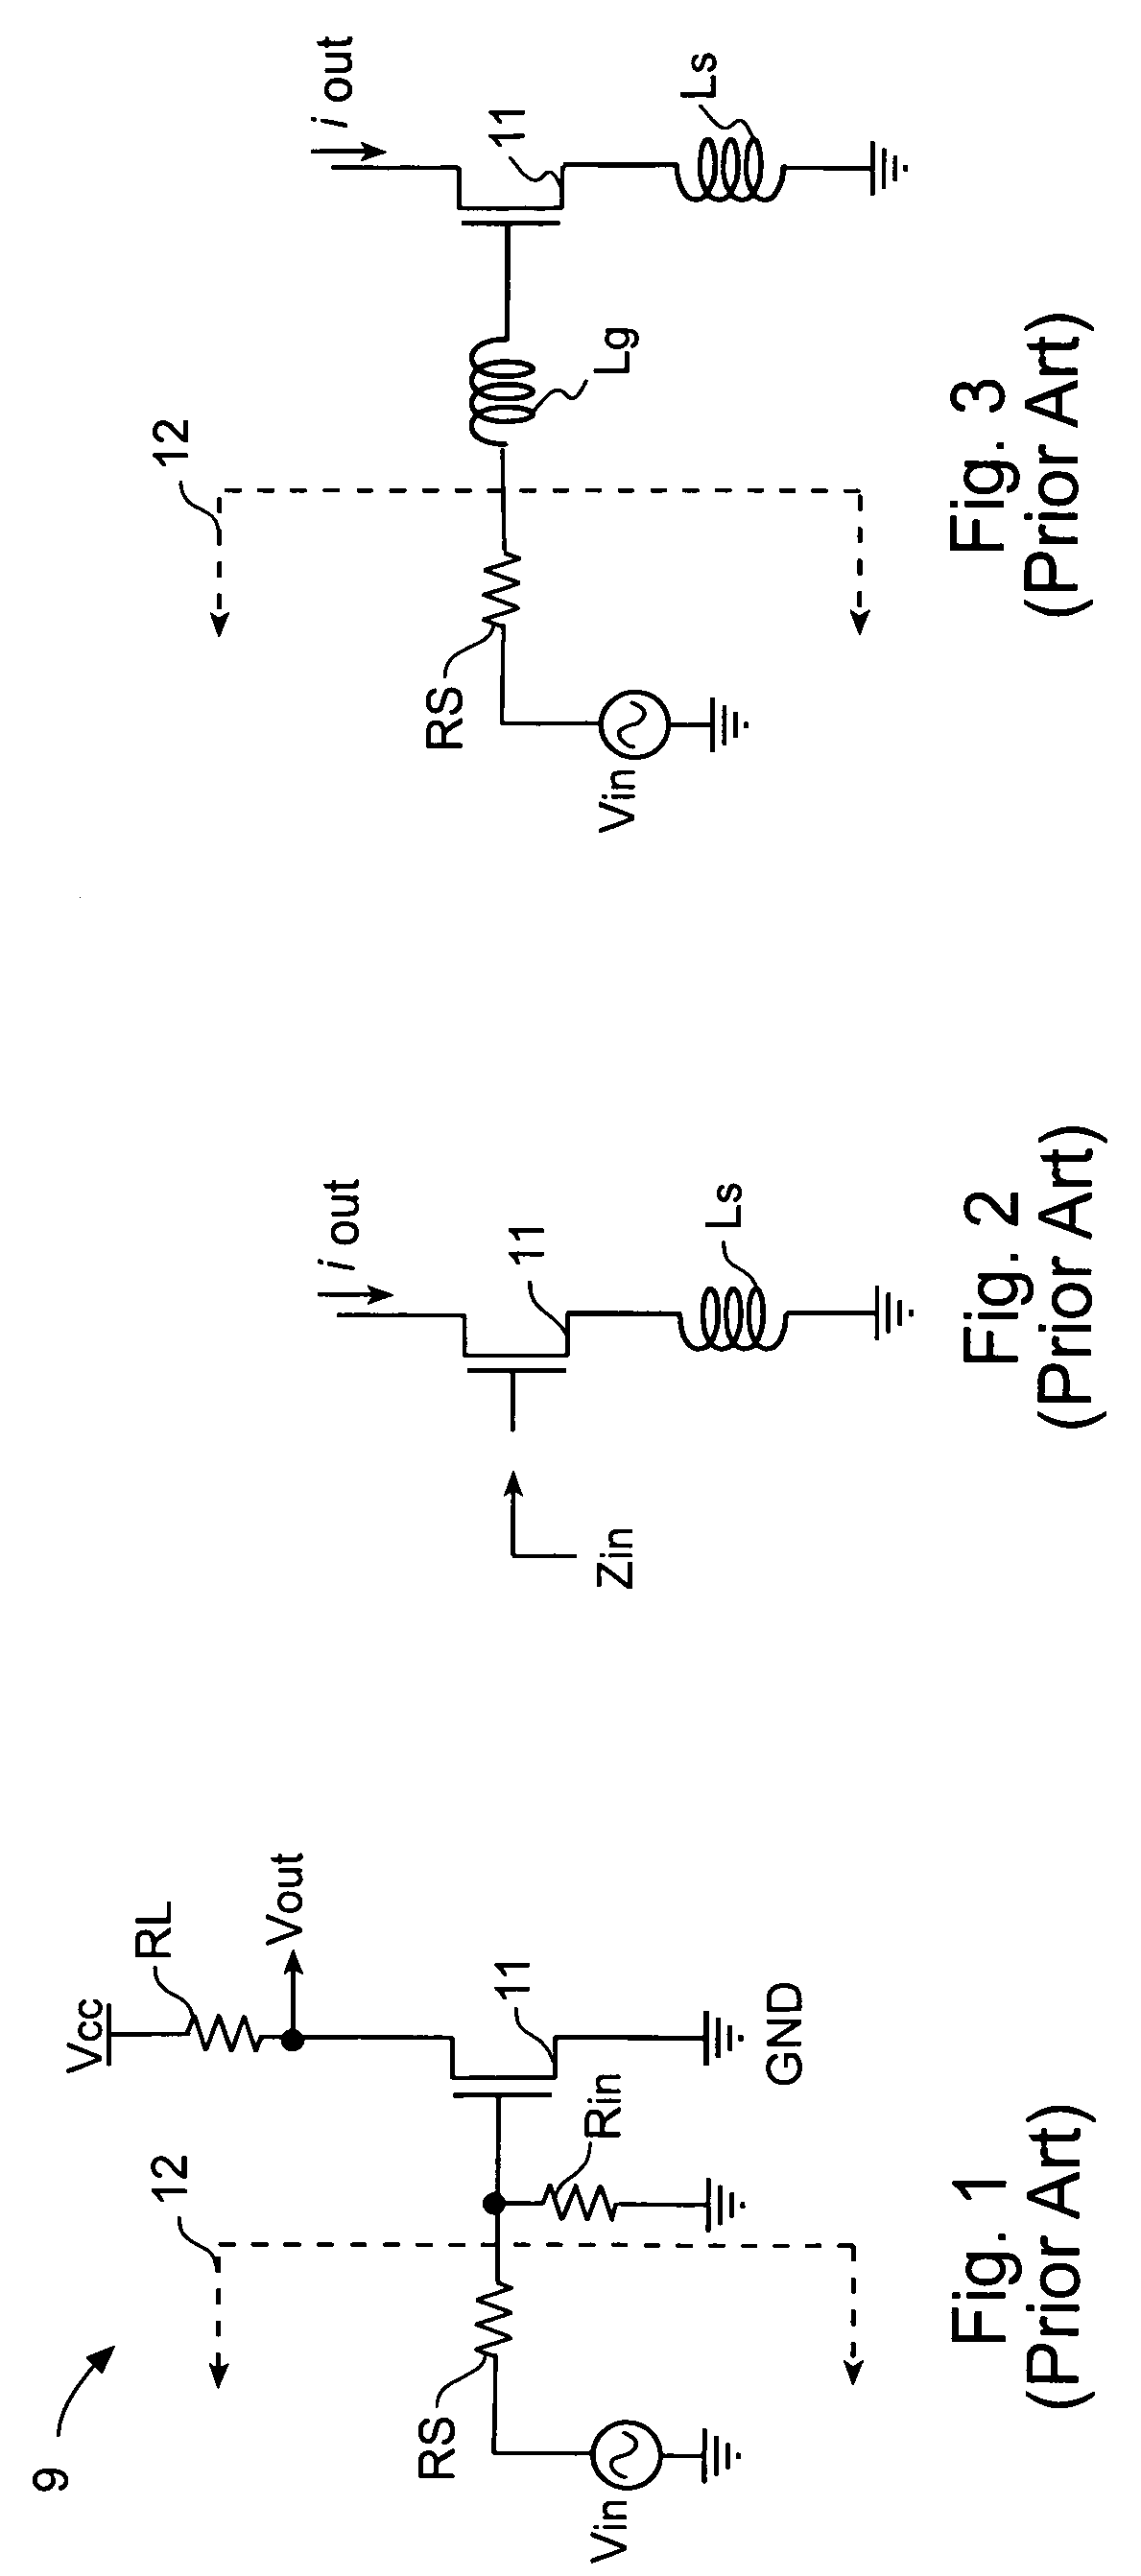 Neutralization techniques for differential low noise amplifiers